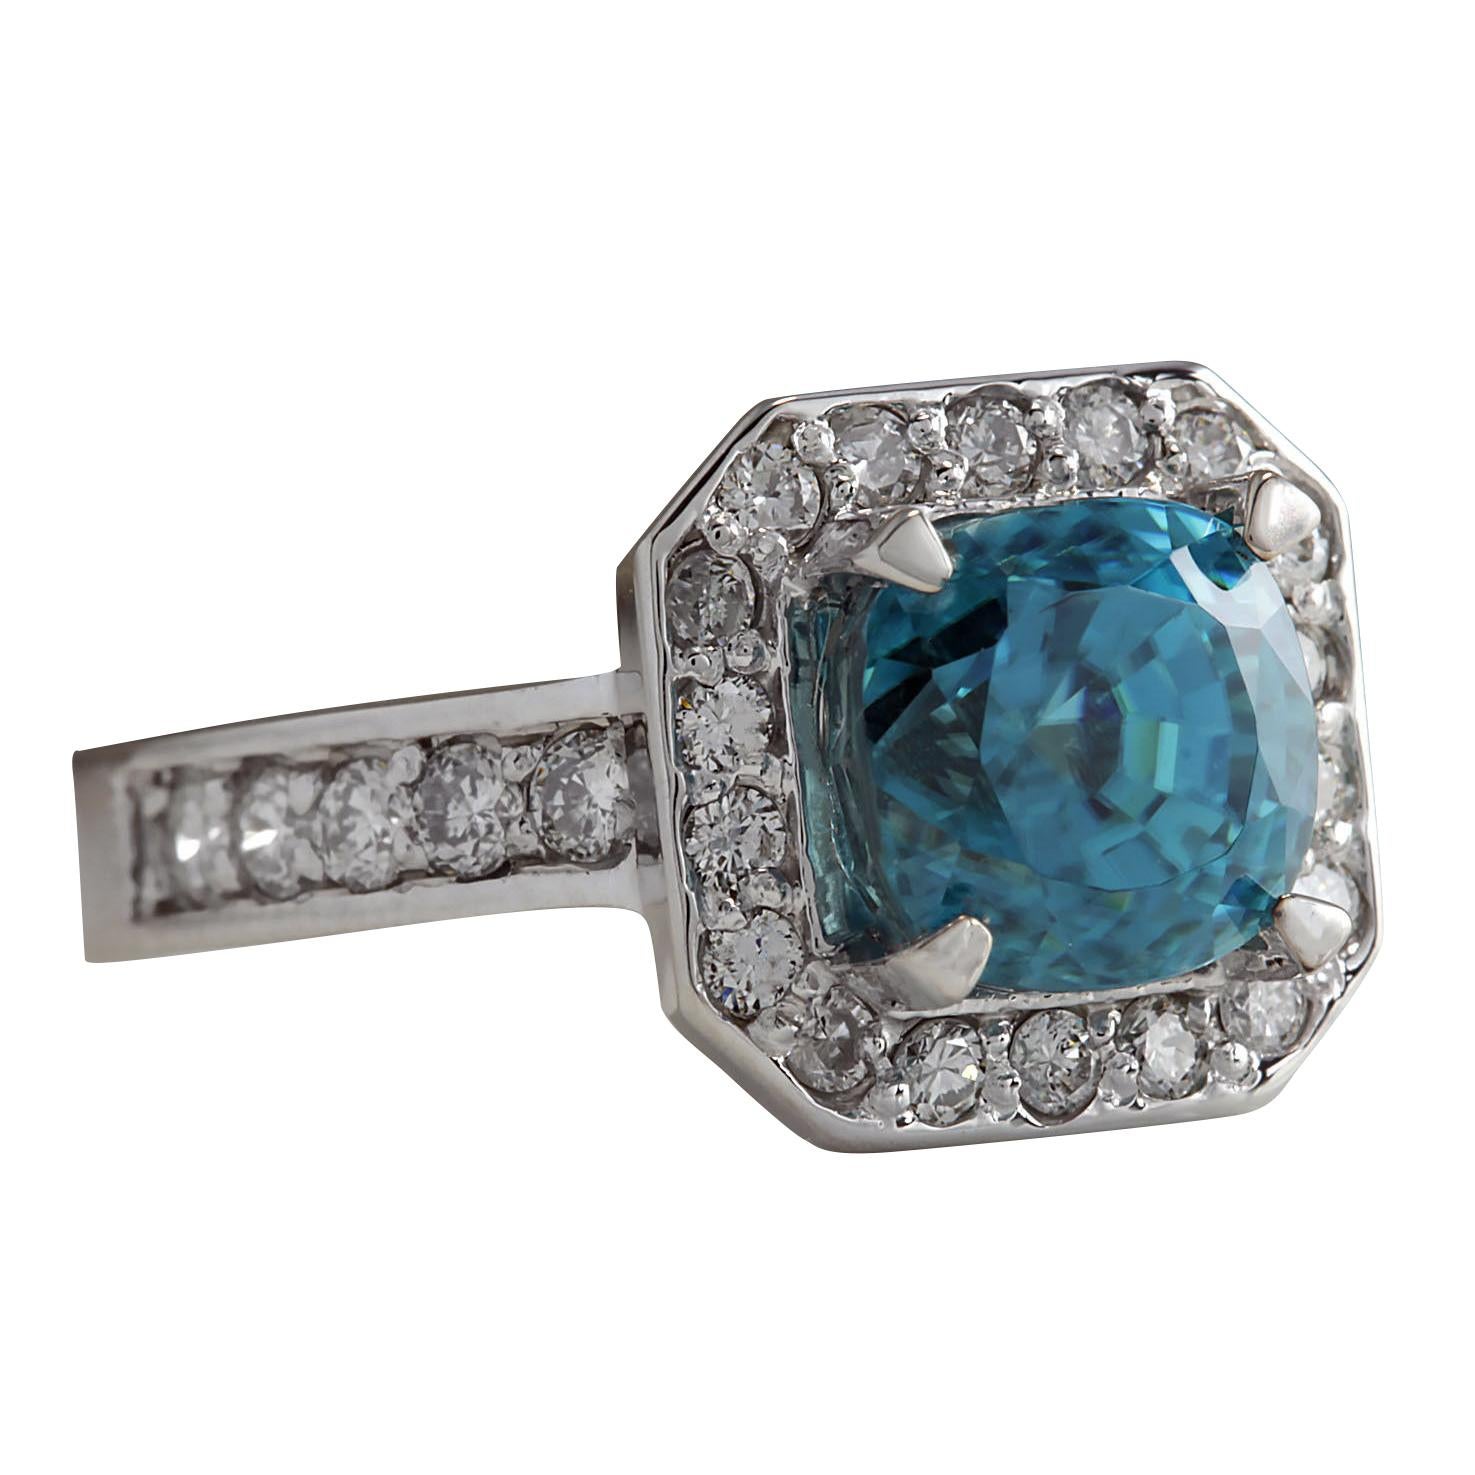 5.85 Carat Natural Zircon 14 Karat White Gold Diamond Ring
Stamped: 14K White Gold
Total Ring Weight: 7.0 Grams
Total Natural Zircon Weight is 5.10 Carat (Measures: 7.50x7.50 mm)
Color: Blue
Total Natural Diamond Weight is 0.75 Carat
Color: F-G,